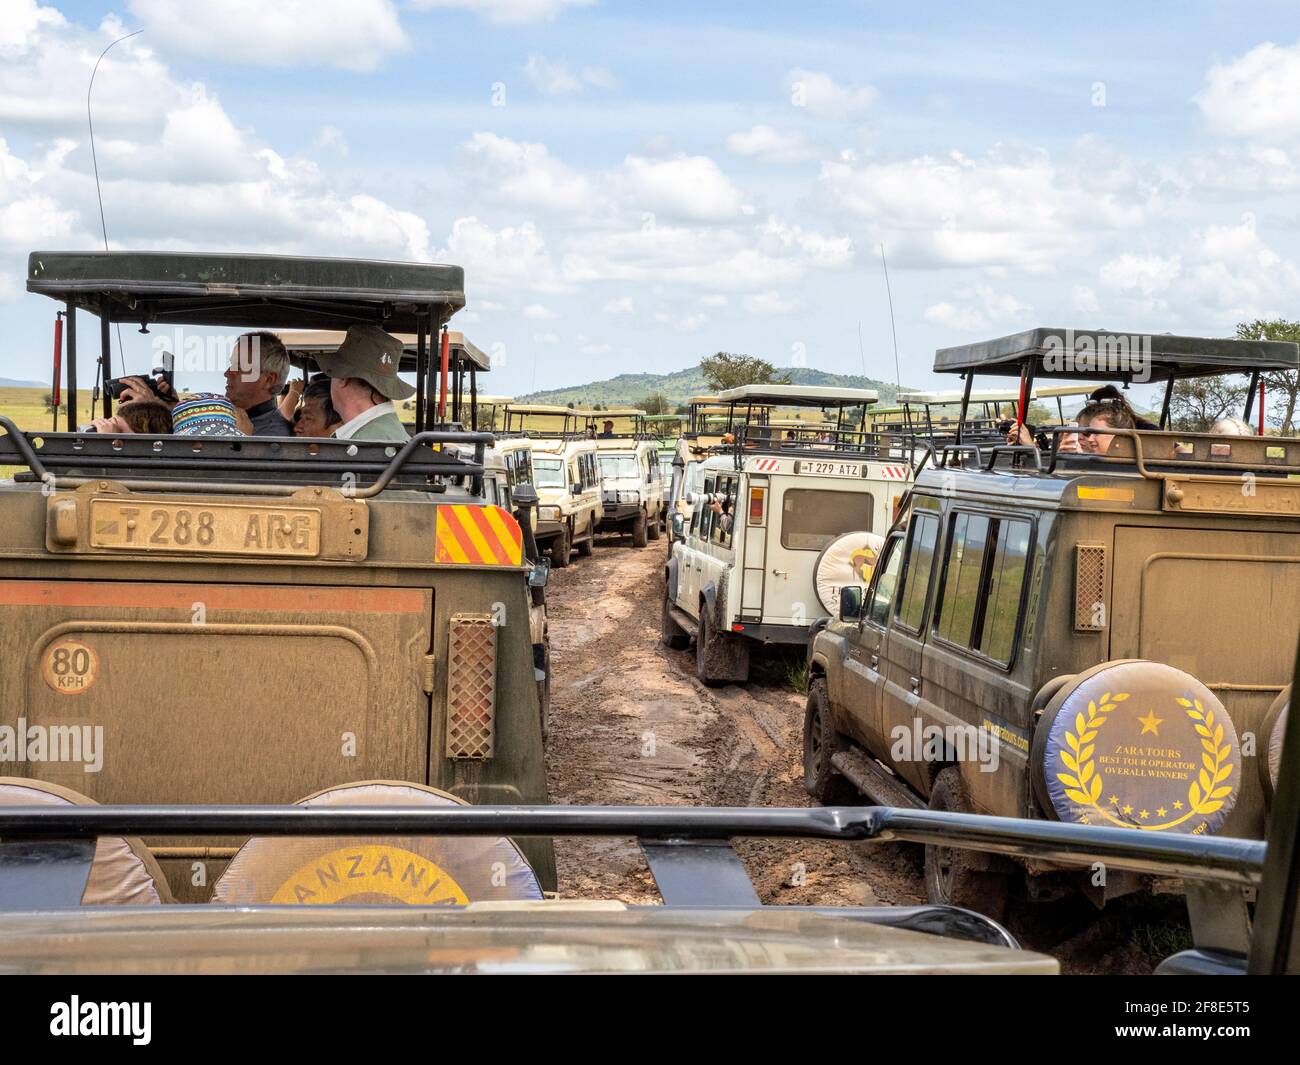 Serengeti National Park, Tanzania, Africa - February 29, 2020: Safari jeeps lined up observing animals Stock Photo